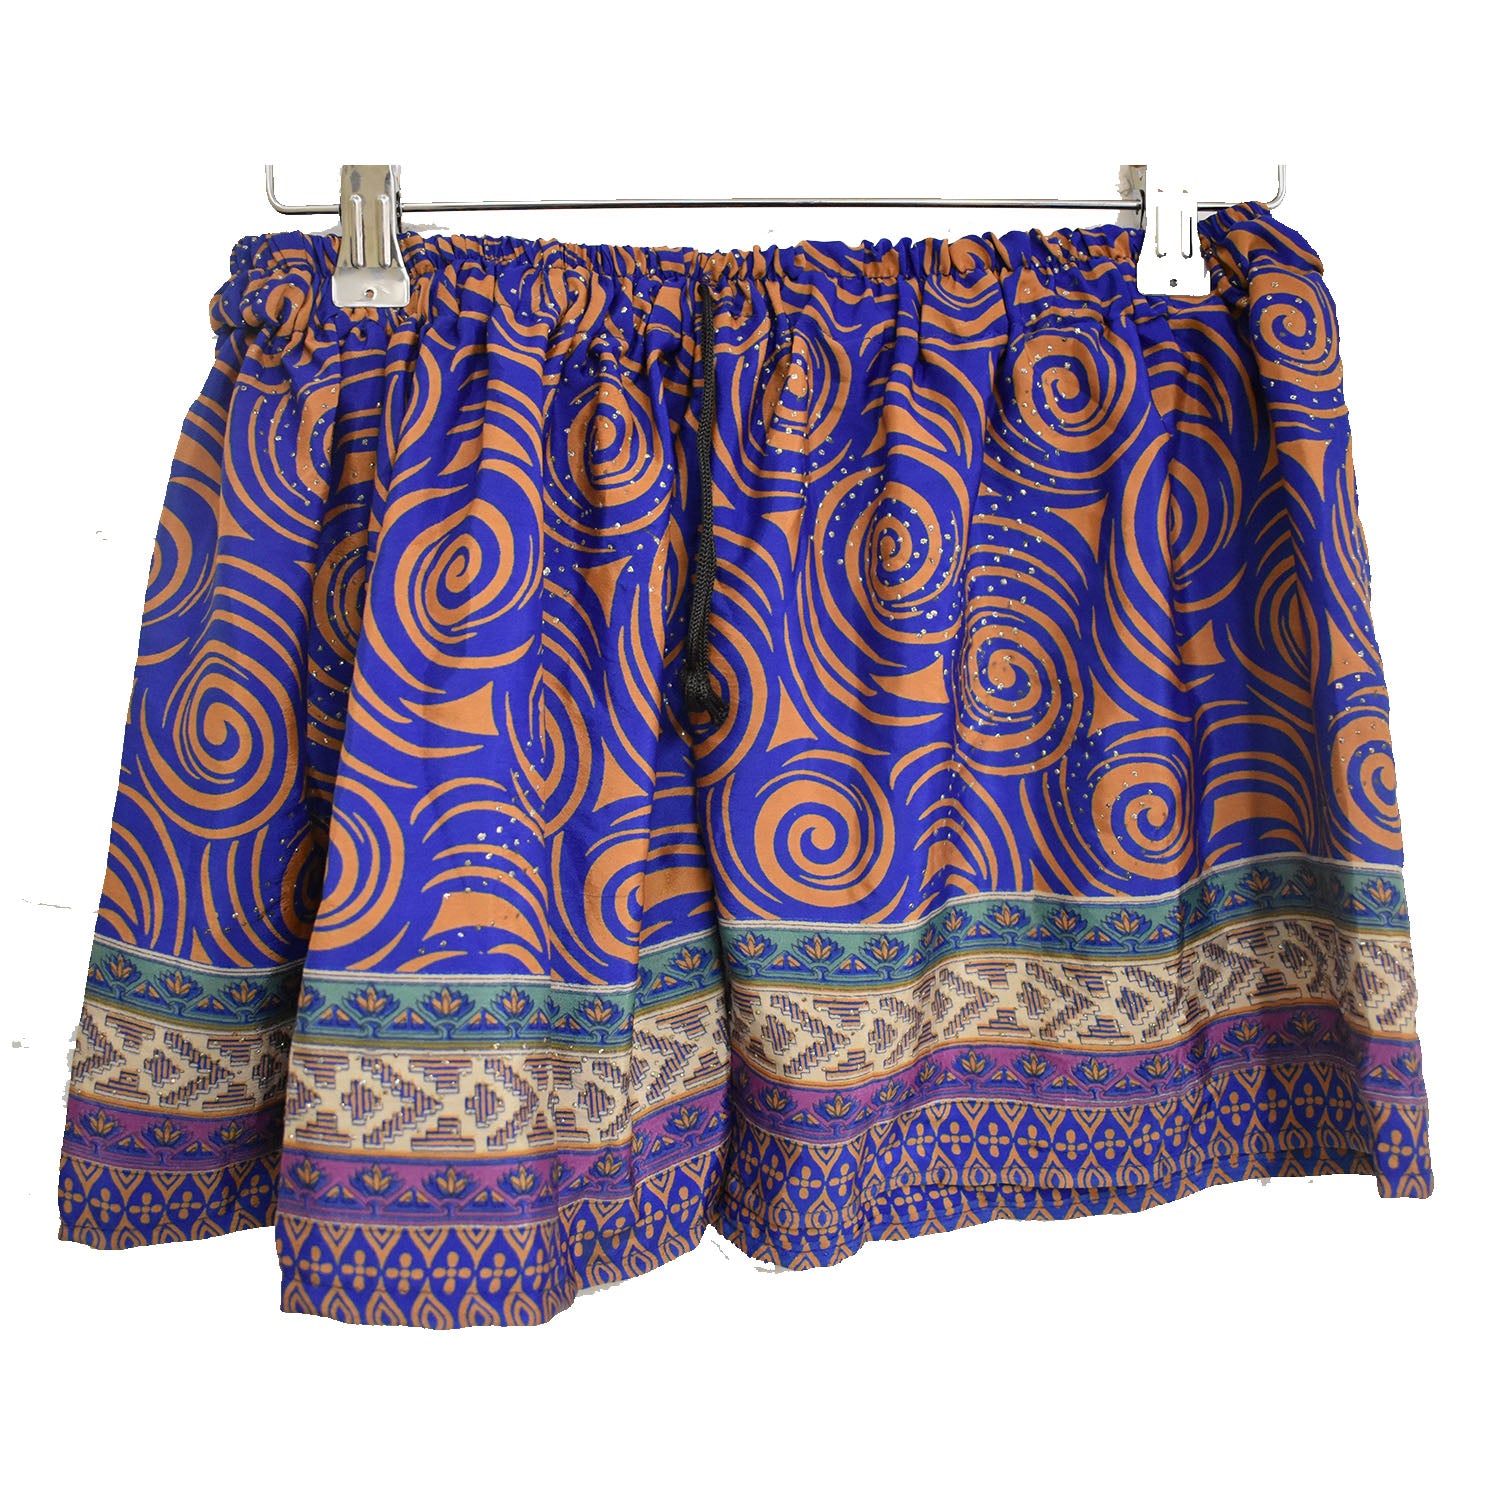 Ganesha Handicrafts Summer Silk Shorts, Shorts, Designed Shorts, Silk Shorts, Summer Shorts, Branded Shorts